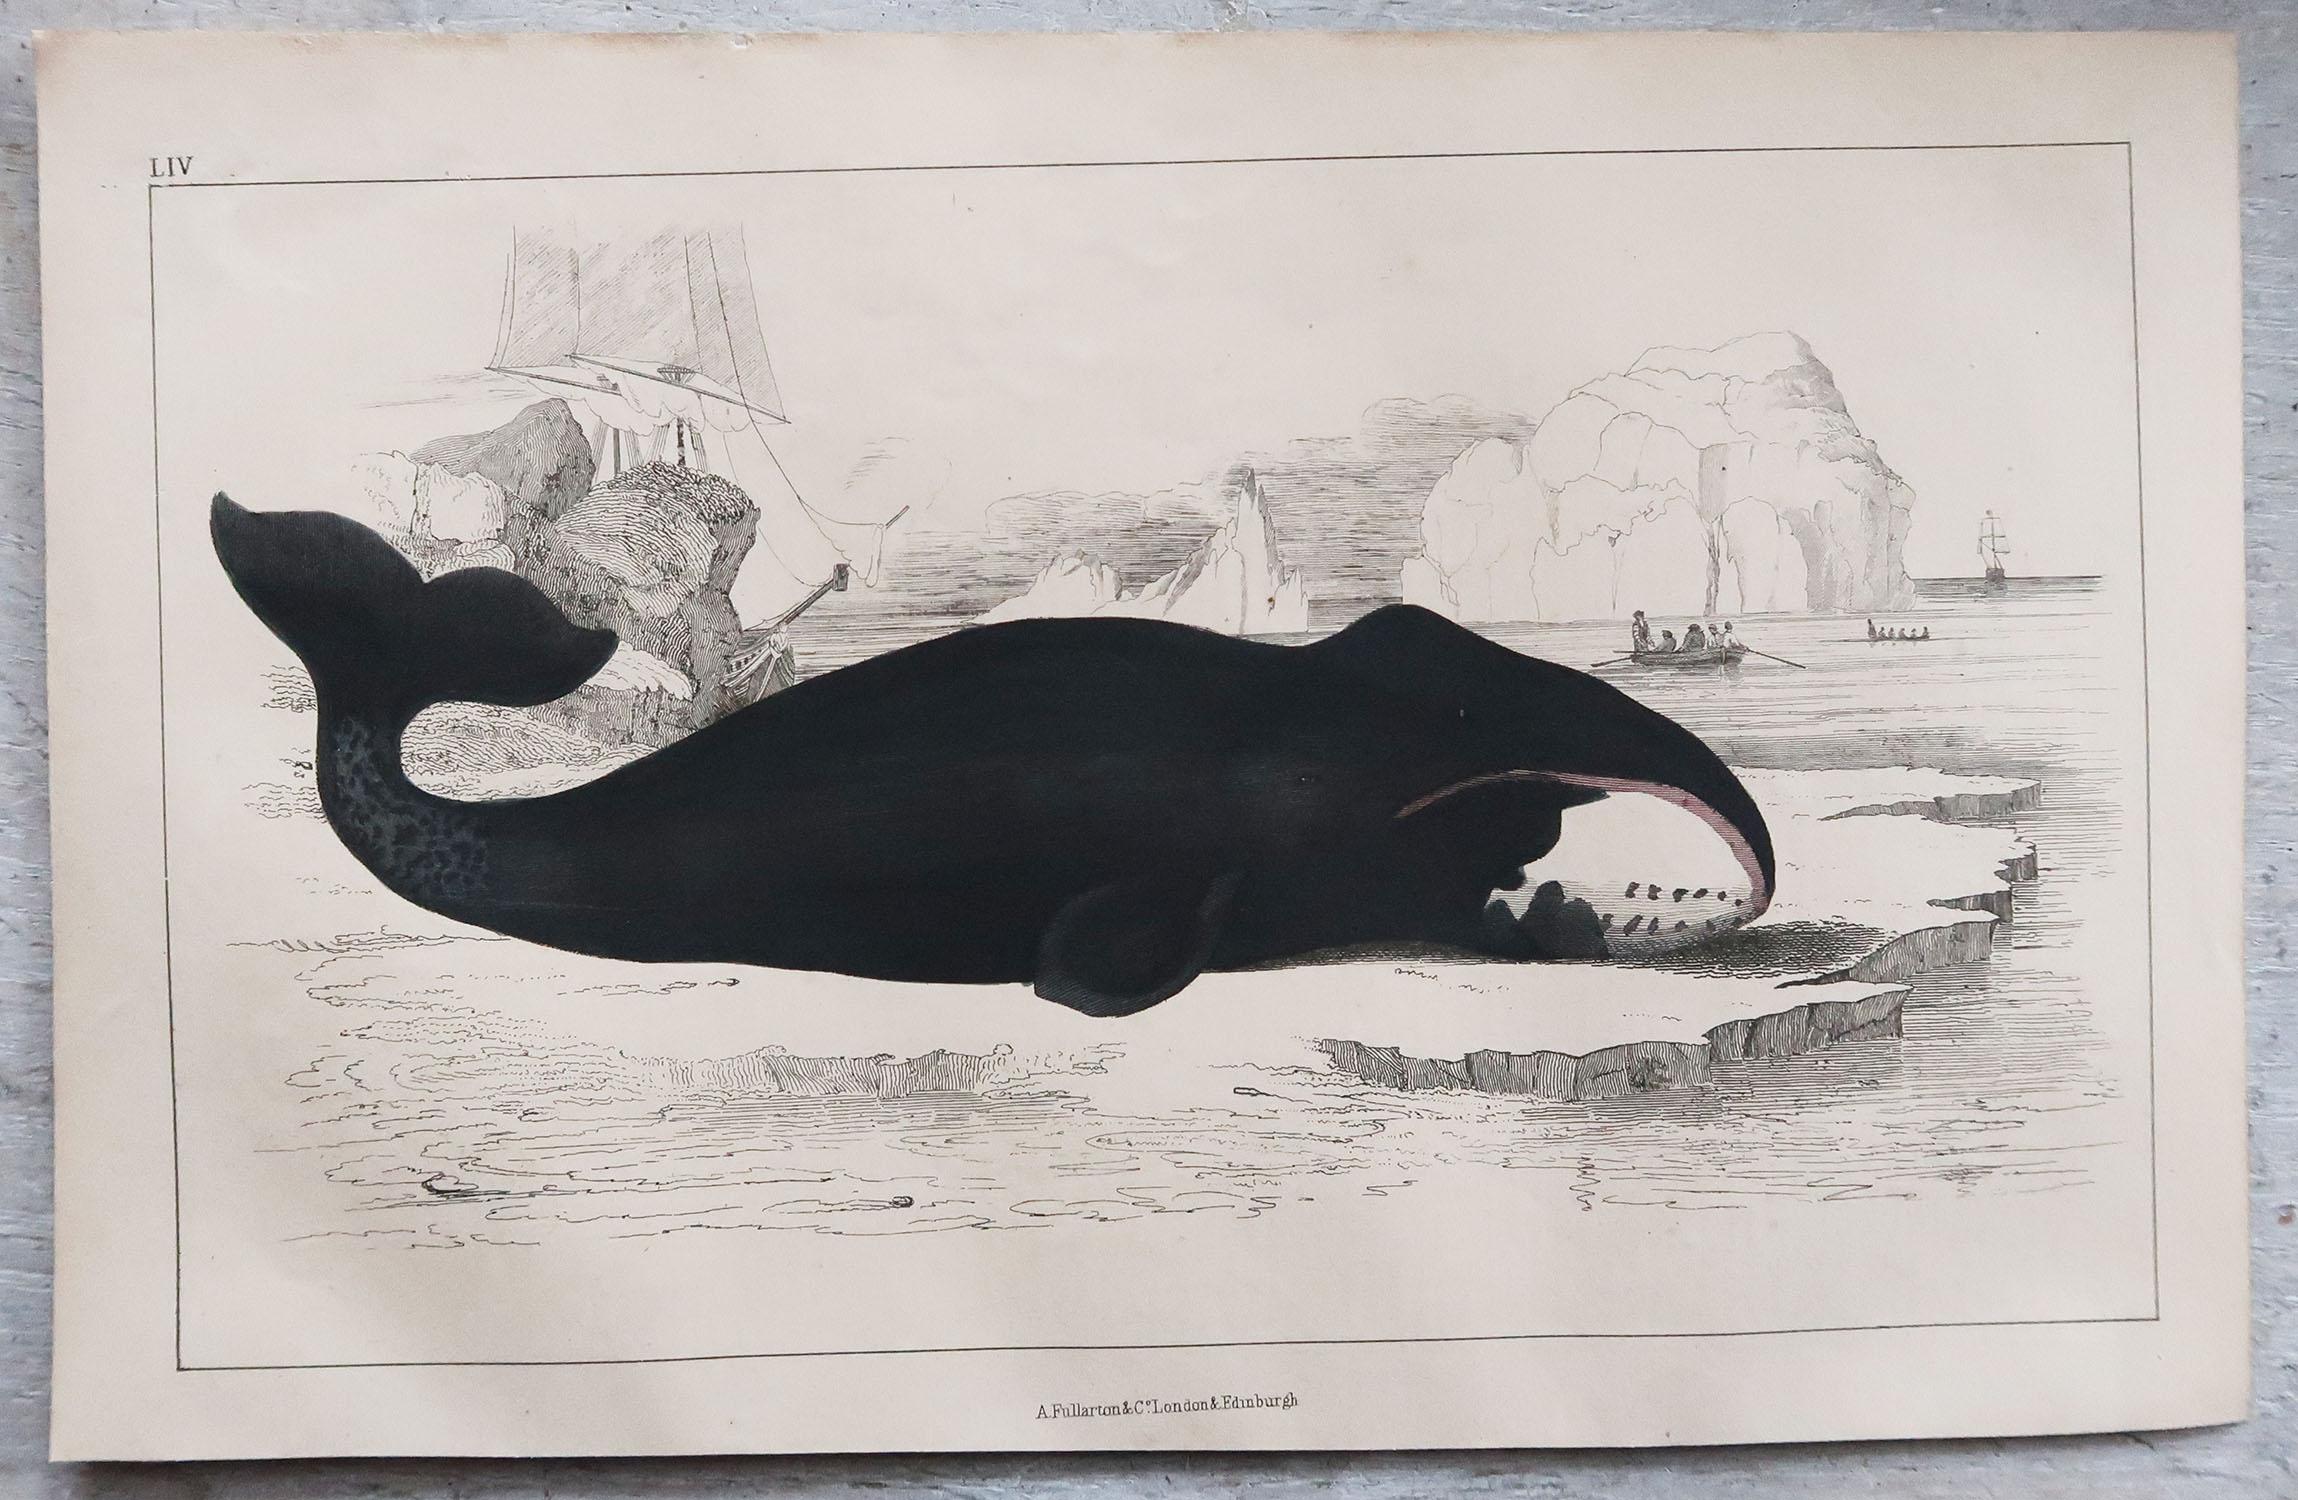 English Original Antique Print of a Whale, 1847 'Unframed'